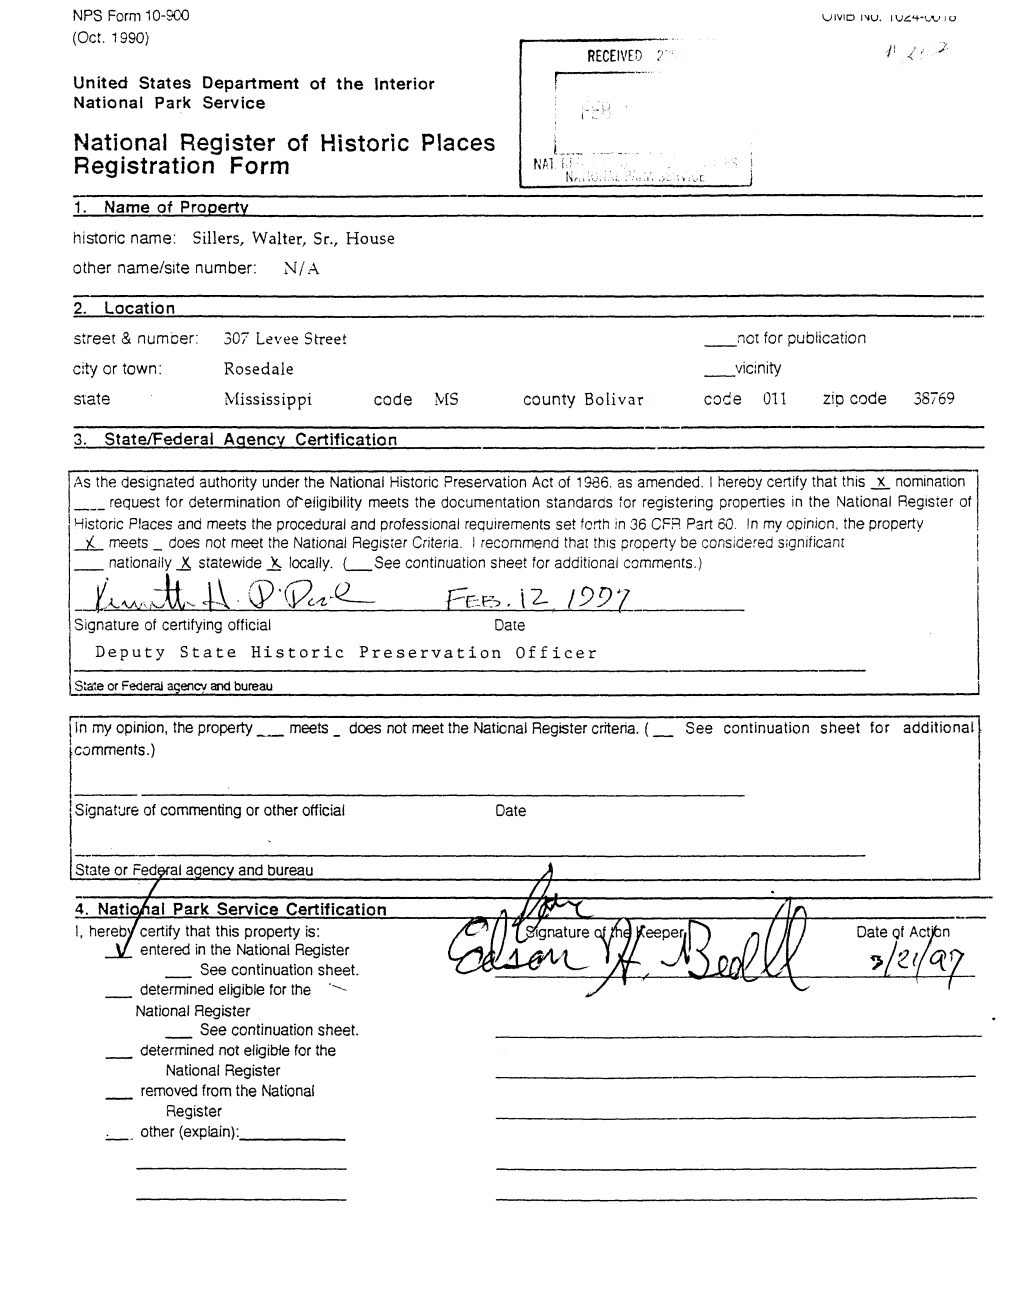 )L^Dt4x .(P'(Plt'£- Fe^.Iz 1997 Signature of Certifying Official Date Deputy State Historic Preservation Officer